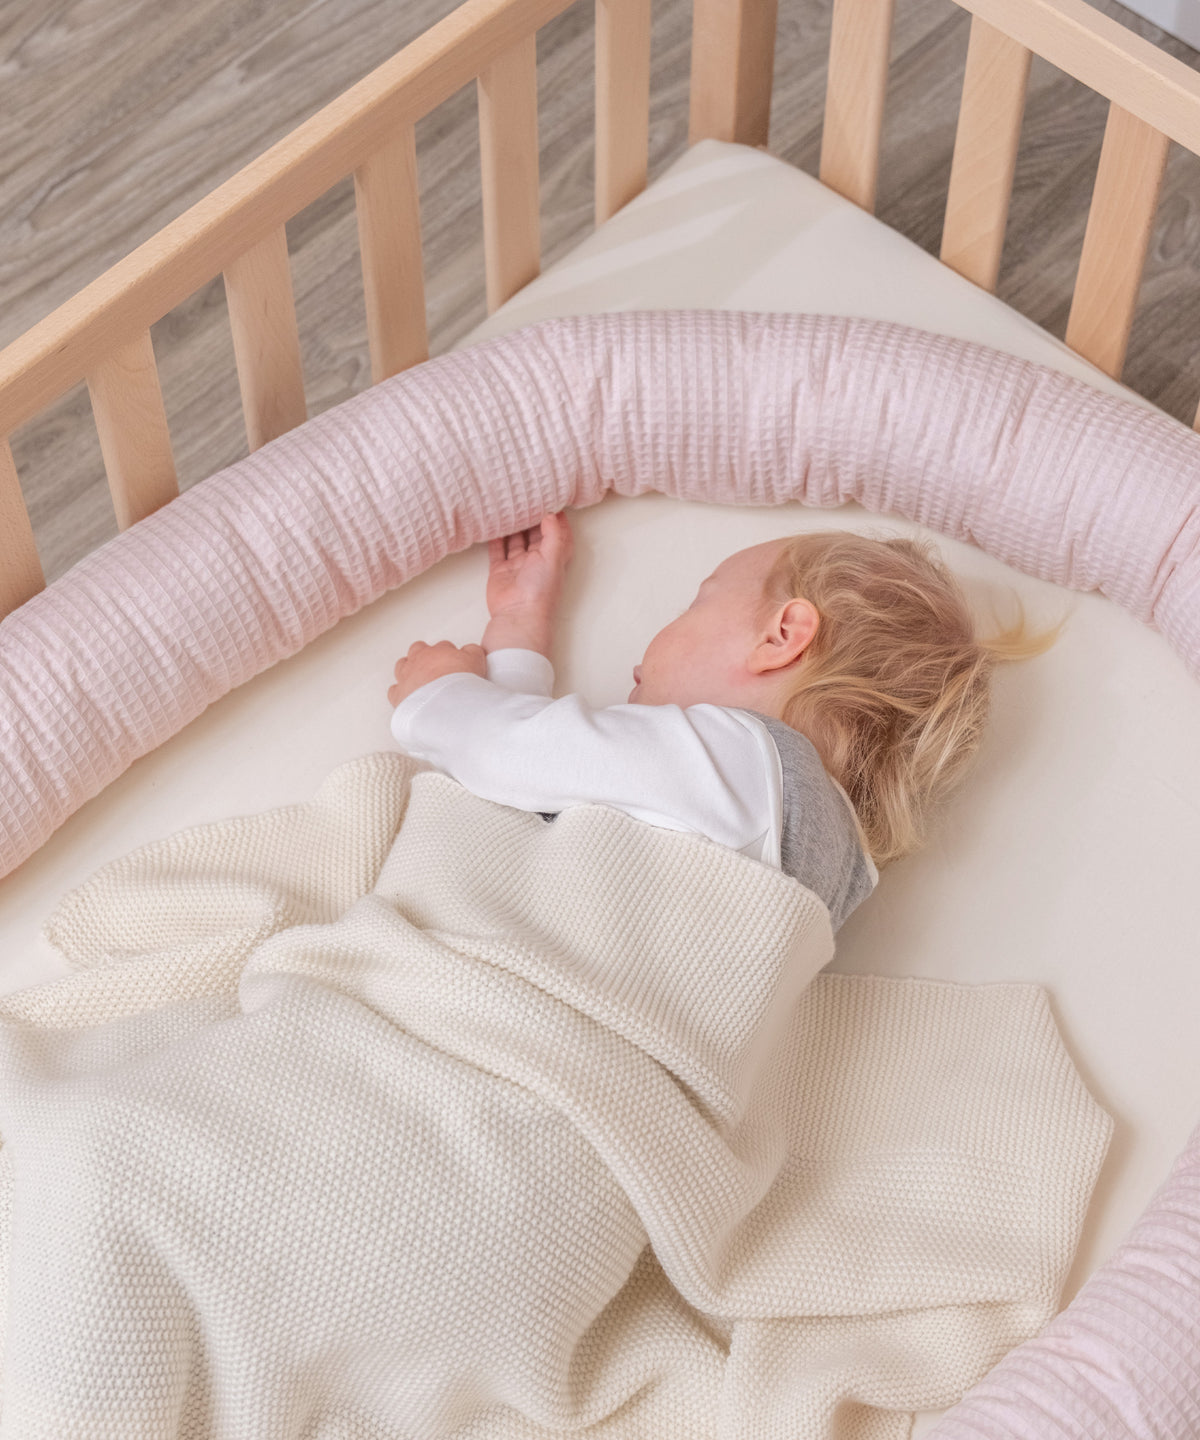 Baby liegt in Bett und schläft, rosa Bettschlange liegt am Gitter entlang.